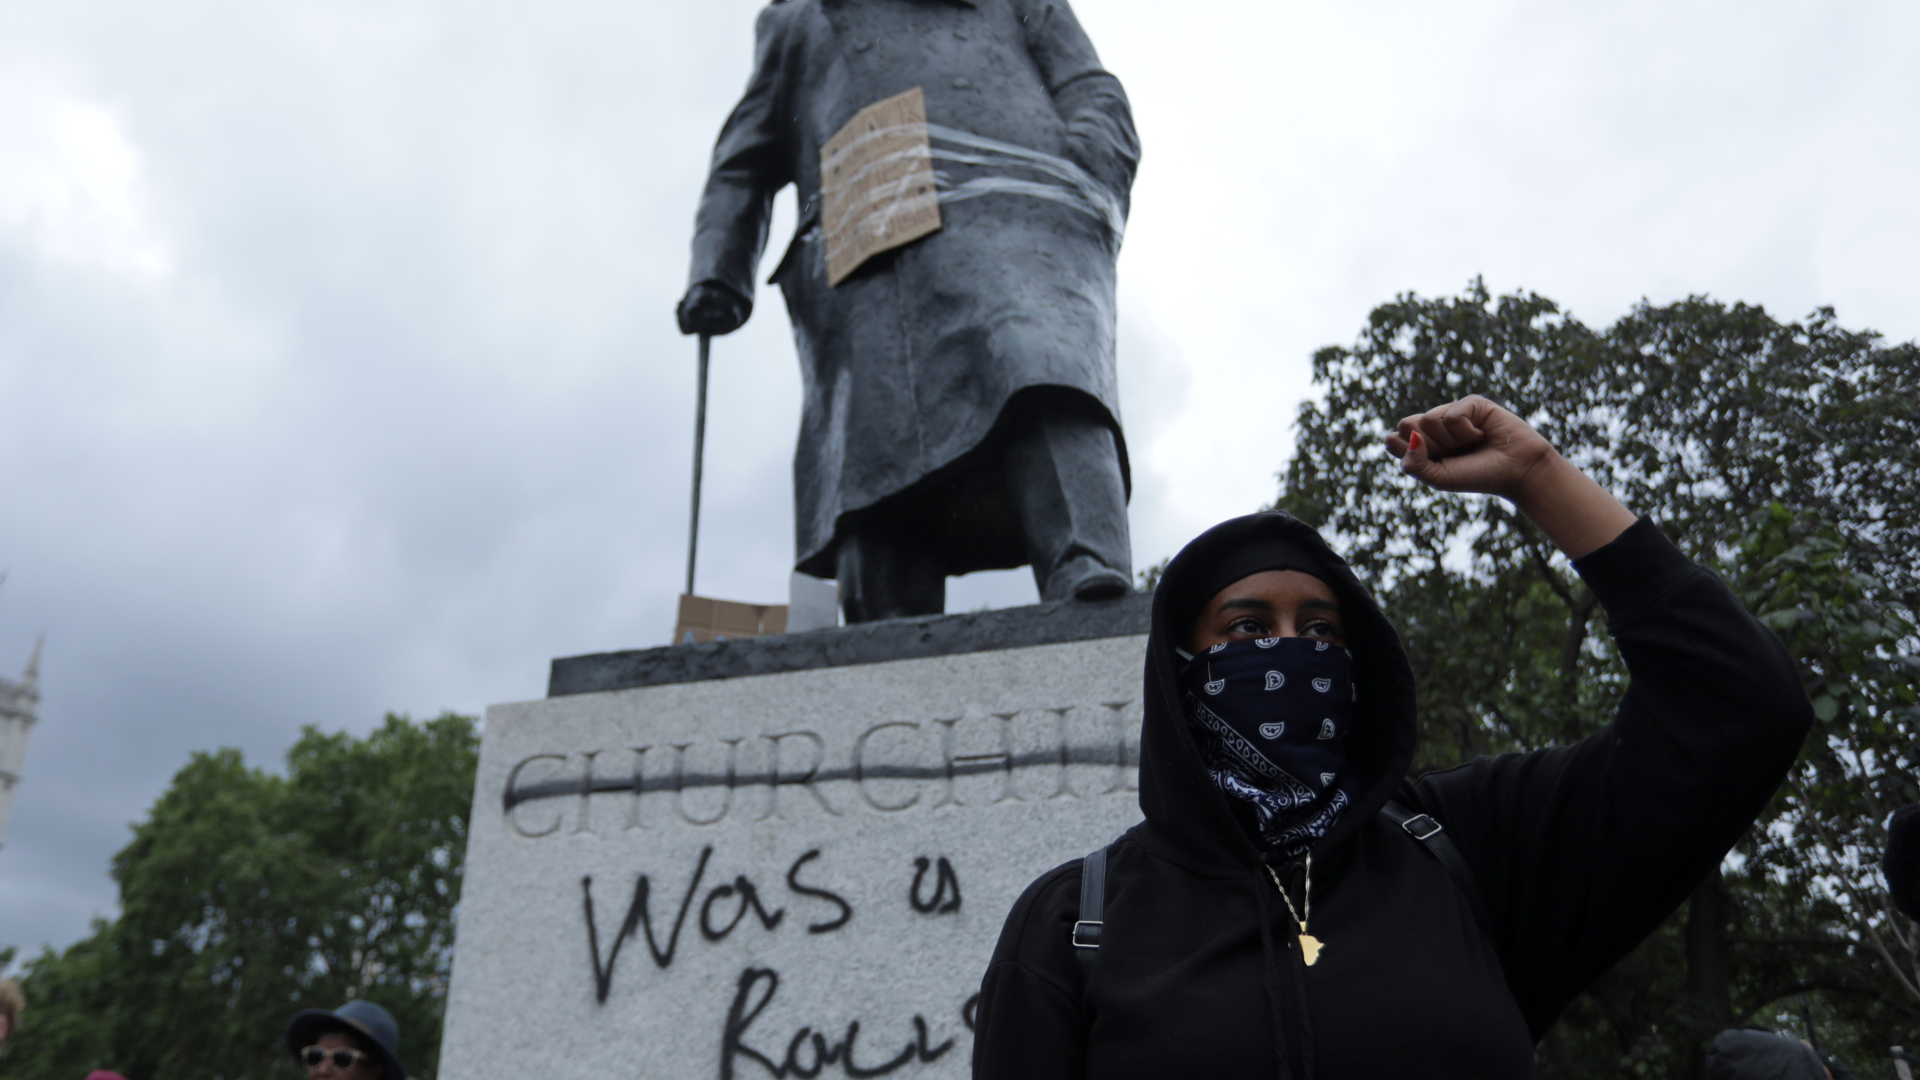 Statue protests reignite focus on Britain's slave trading past - CGTN